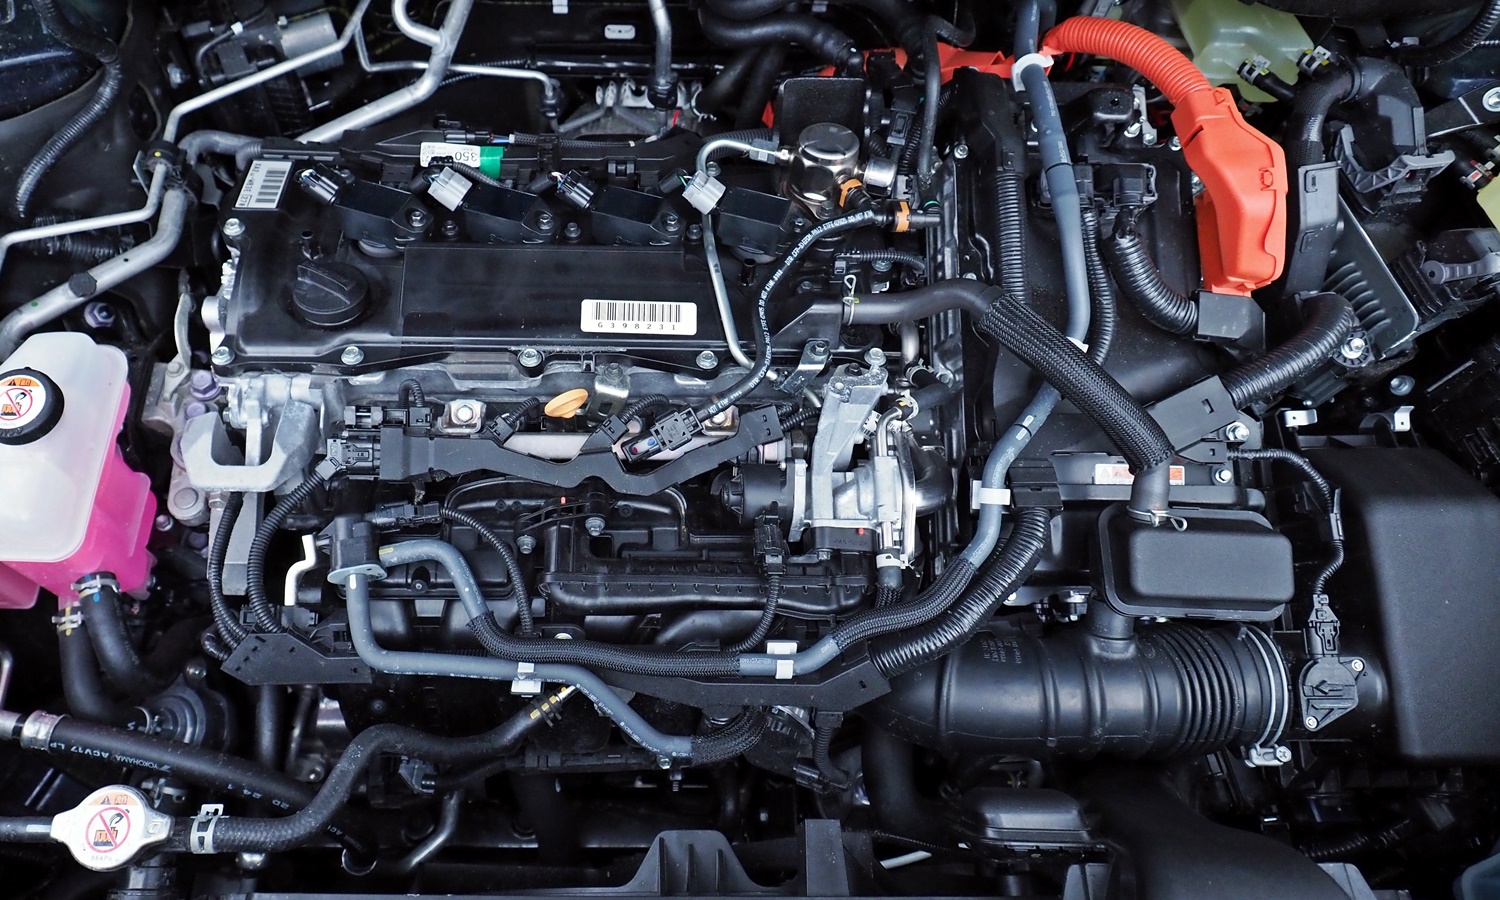 Toyota Highlander Photos: Toyota Highlander Hybrid engine uncovered